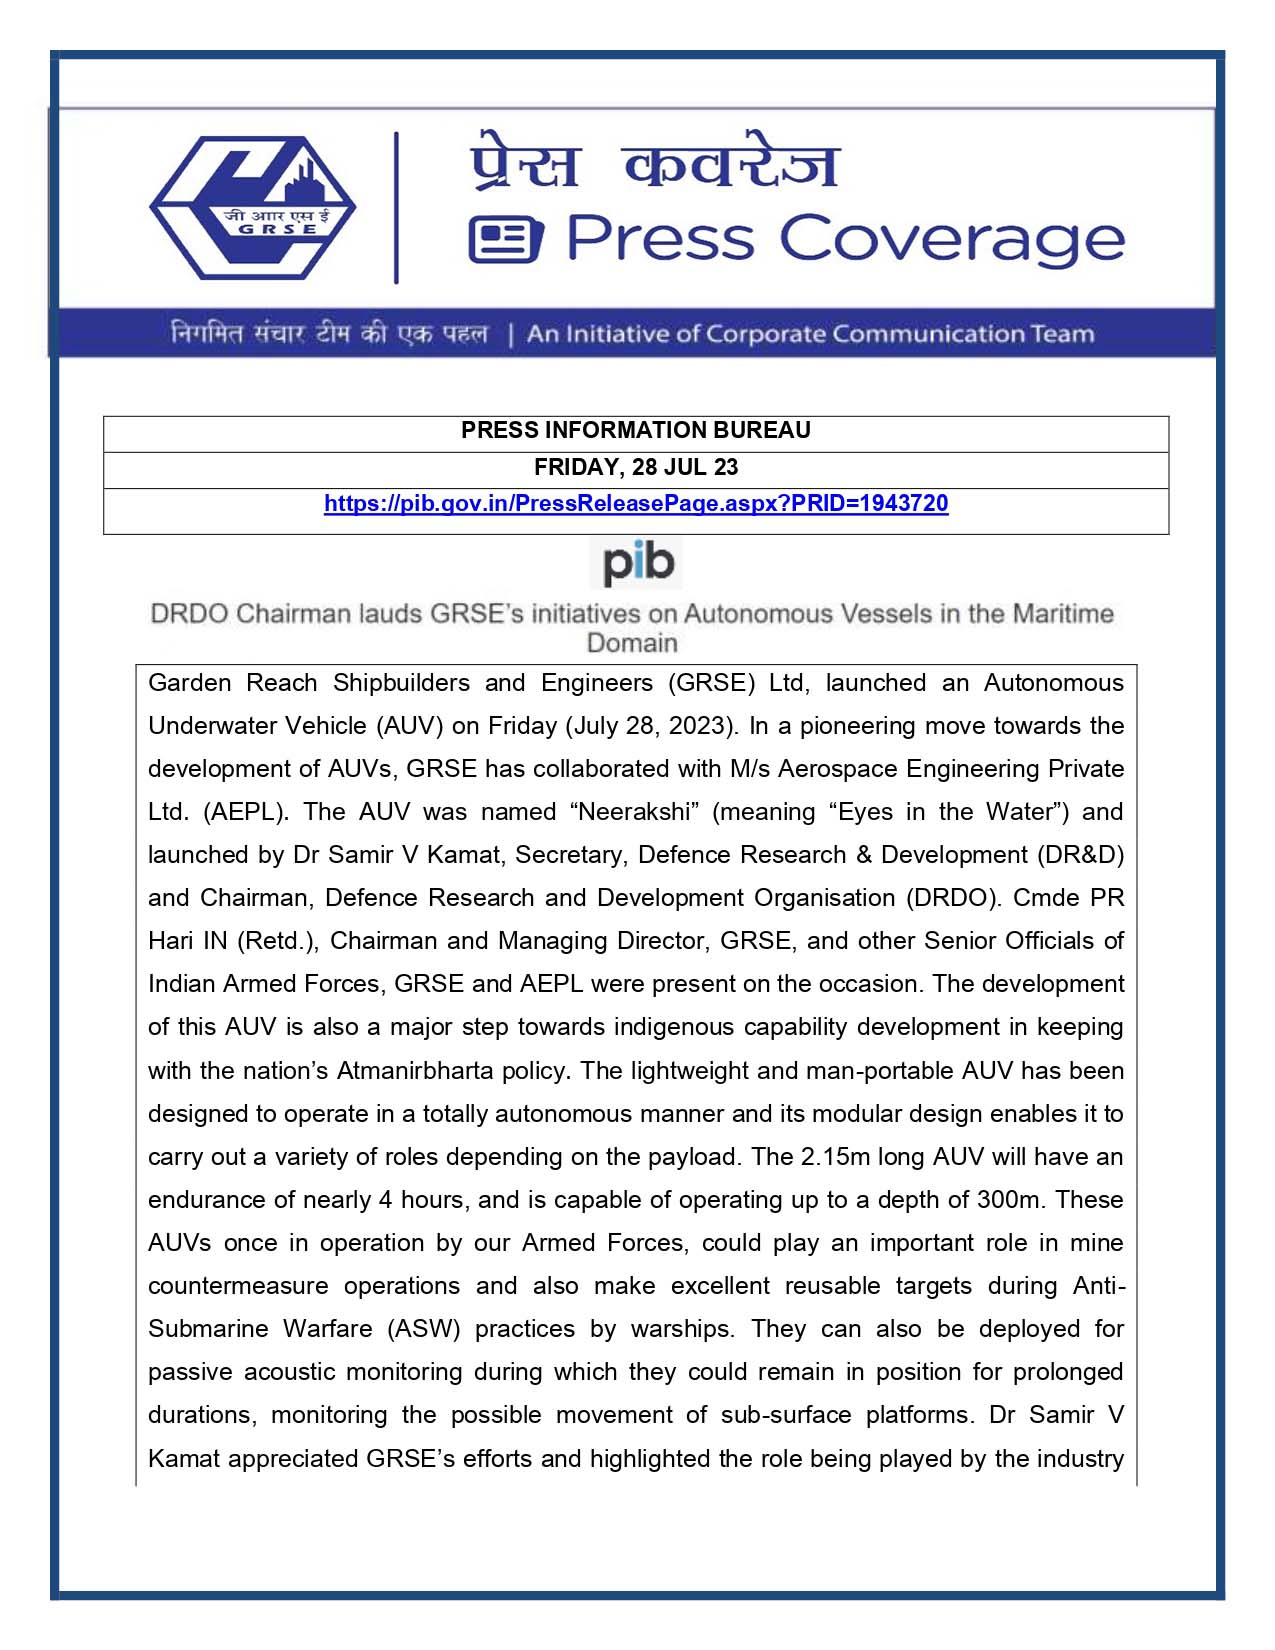 Press Coverage : Press Information Bureau, 28 Jul 23 : DRDO Chairman lauds GRSE's initiative on Autonomous Vessels in the Maritime Domain